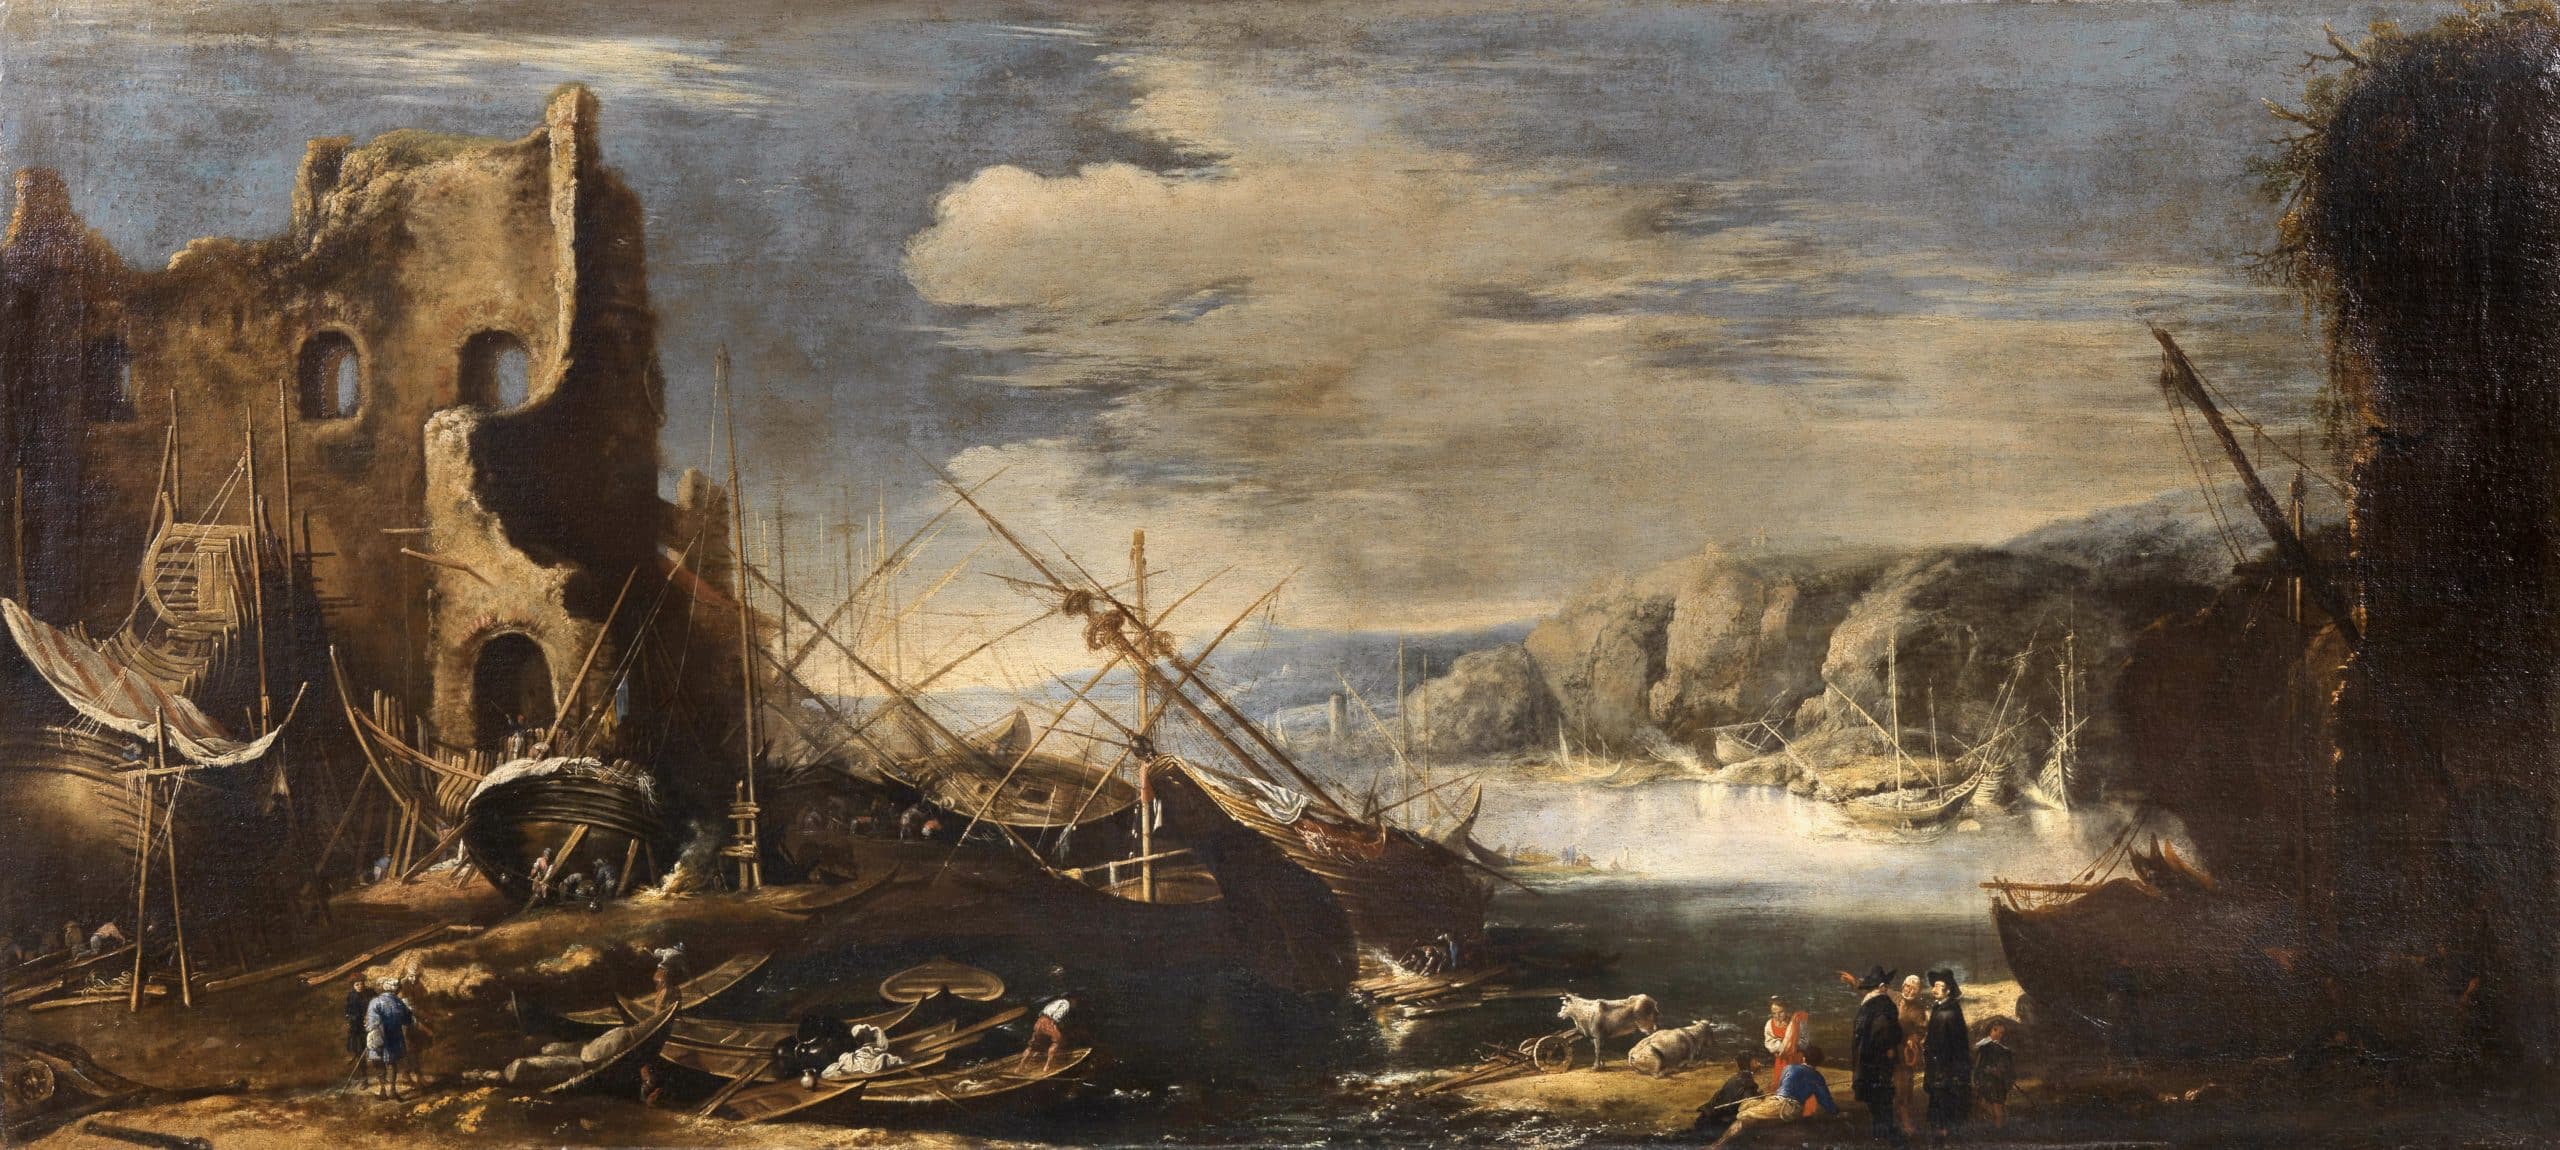 A coastal landscape with shipwrecks and ruins